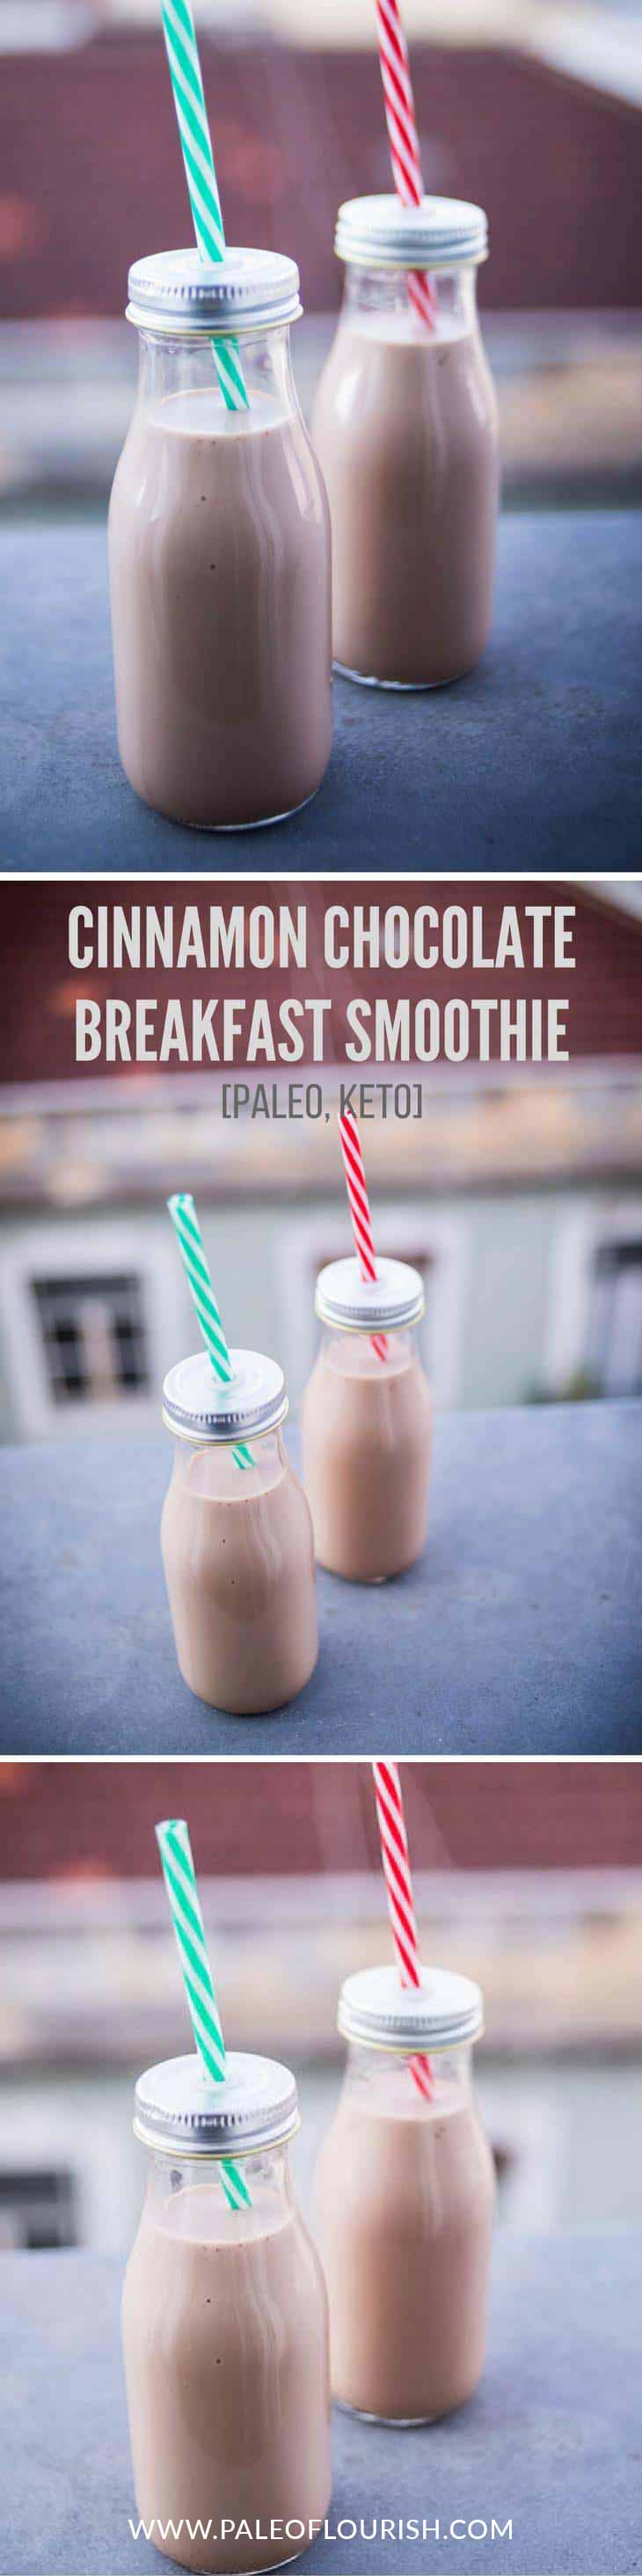 Cinnamon Chocolate Breakfast Smoothie Recipe [Paleo, Keto] #paleo #keto - https://paleoflourish.com/cinnamon-chocolate-breakfast-smoothie-recipe-paleo-keto